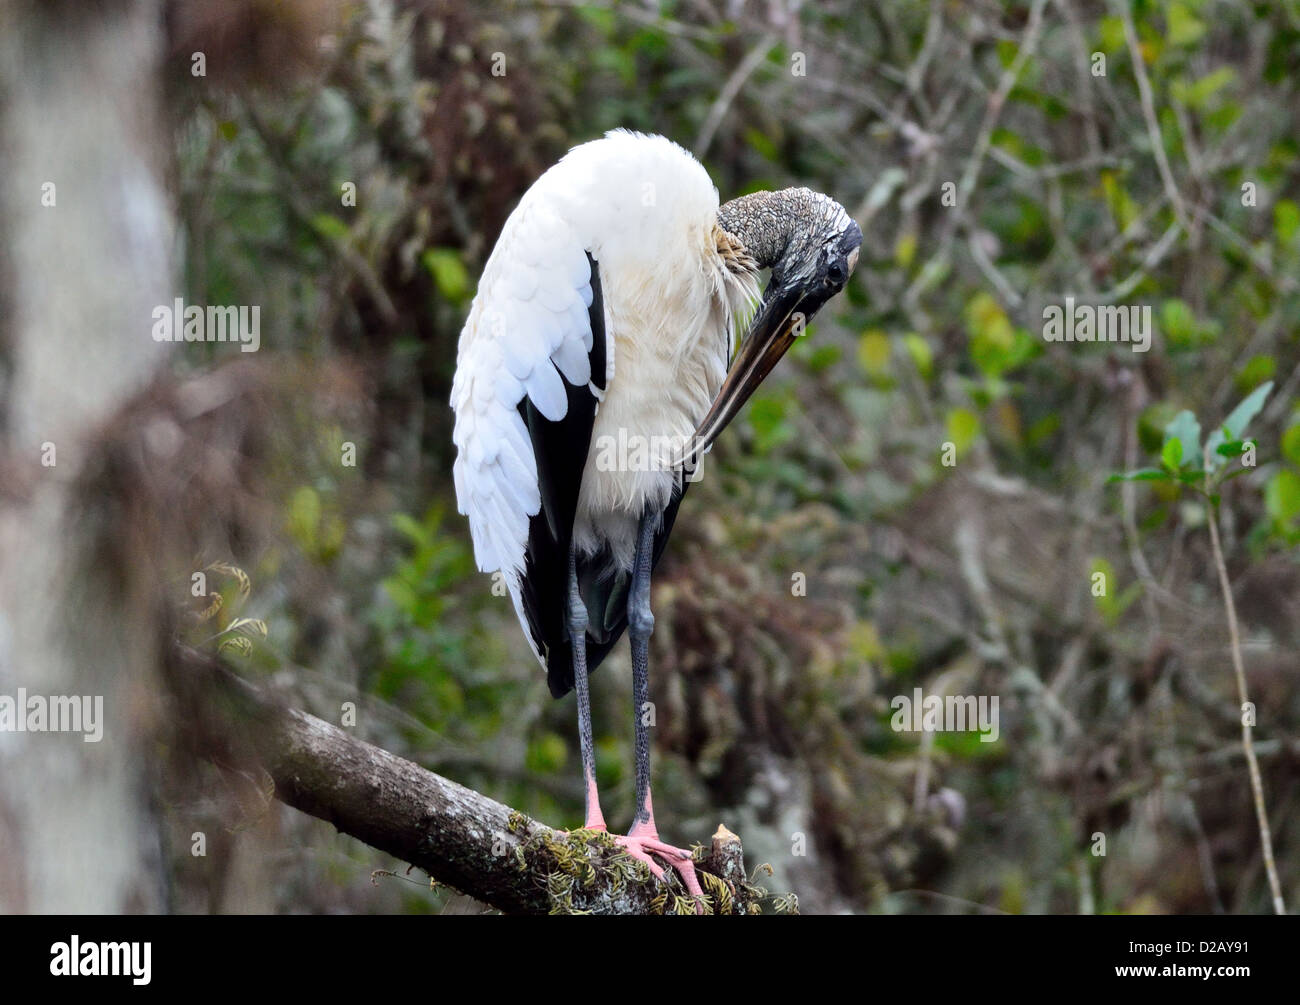 A wood stork in its natural habitat. Big Cypress National Preserve, Florida, USA. Stock Photo